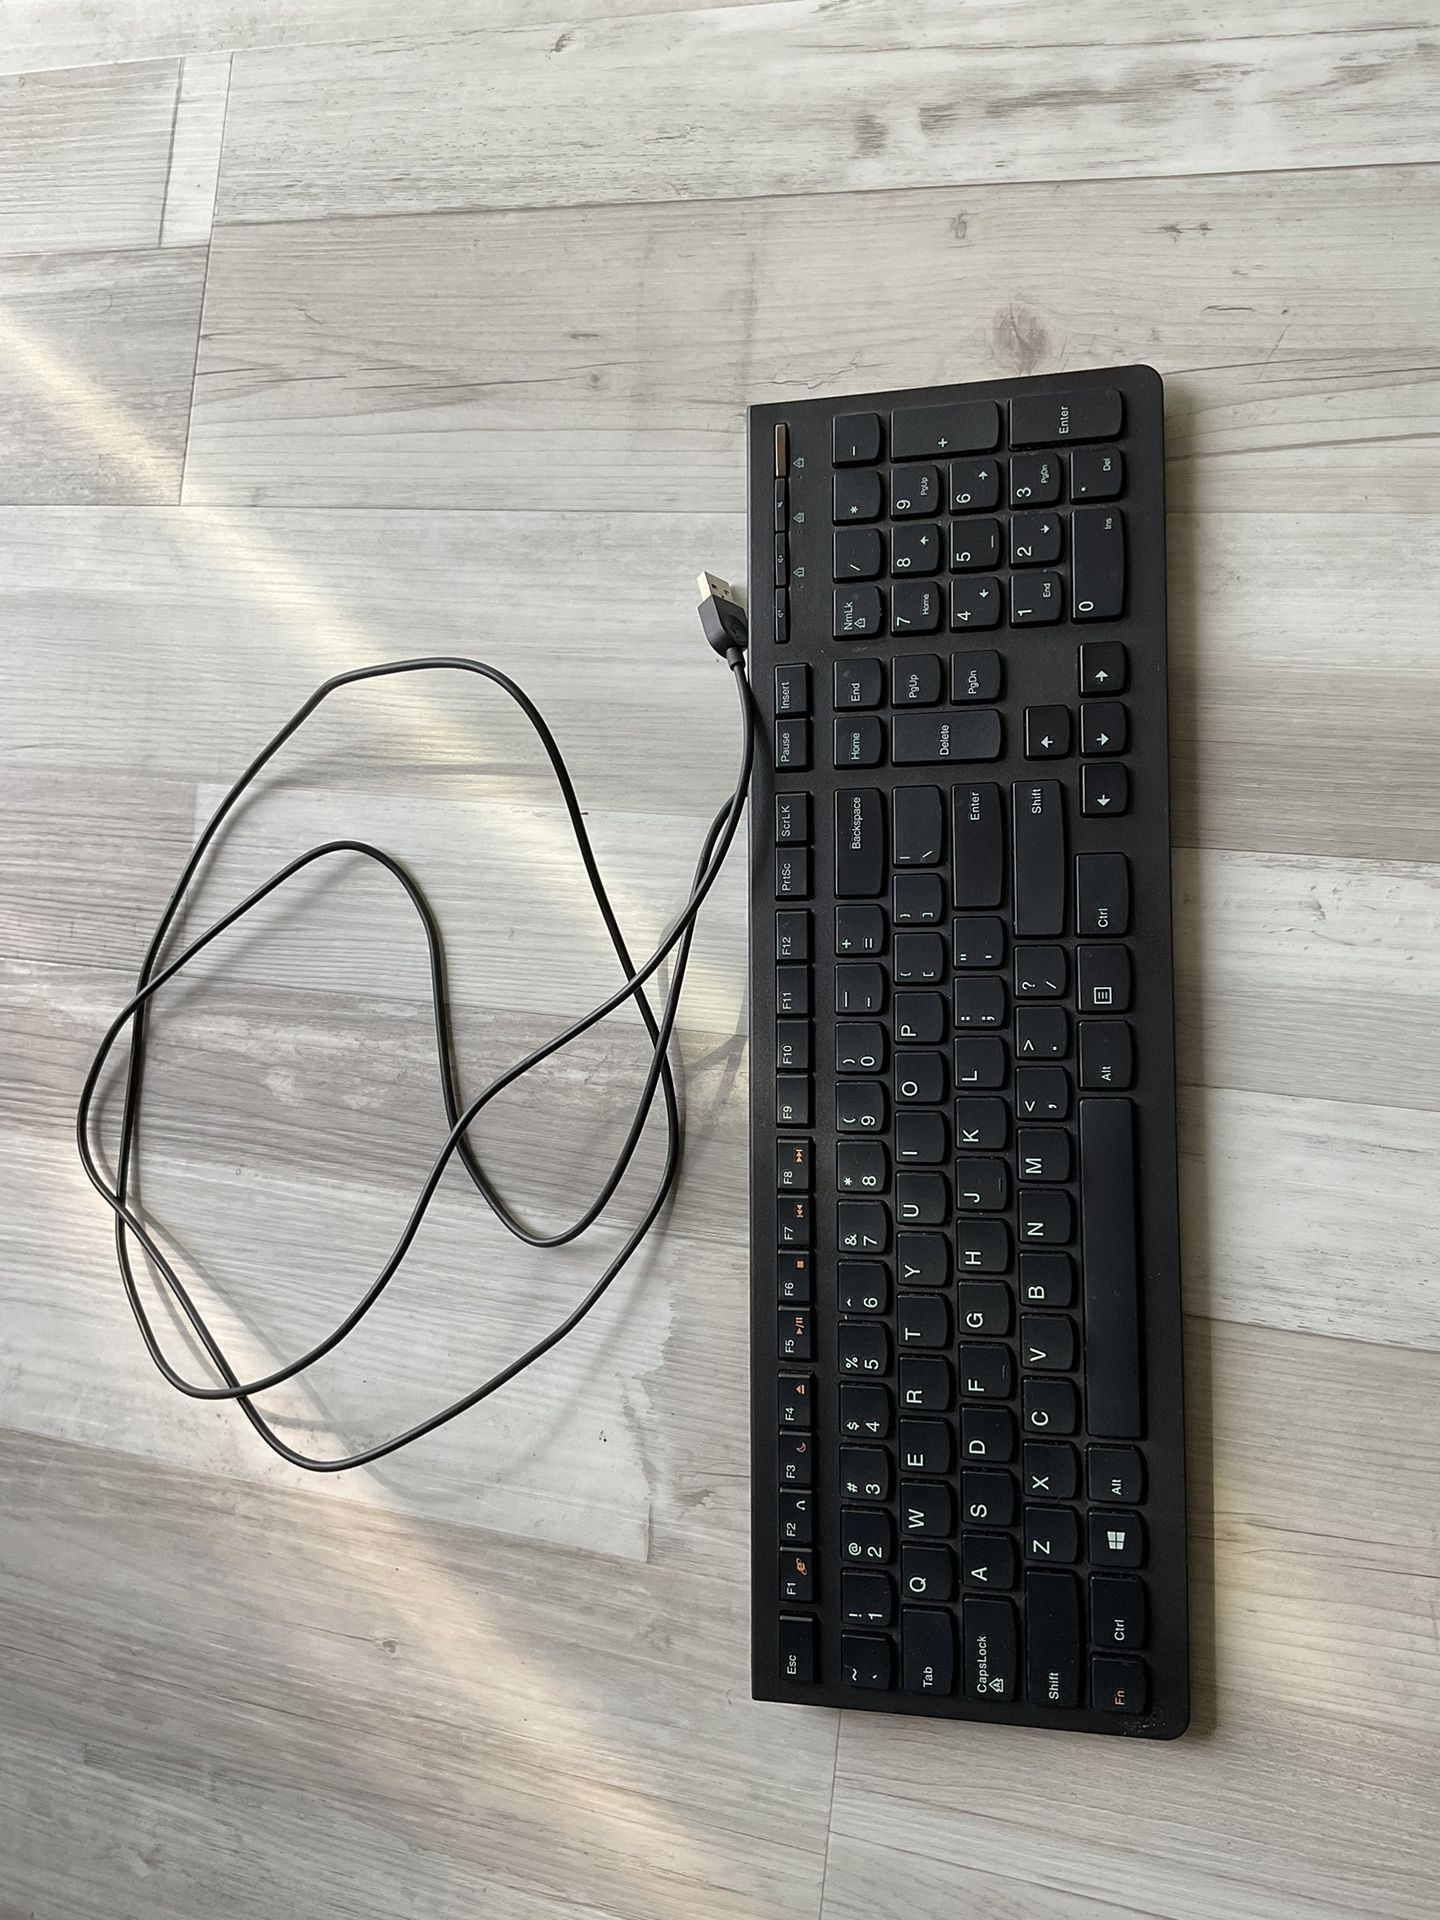 Keyboard (rarely used)